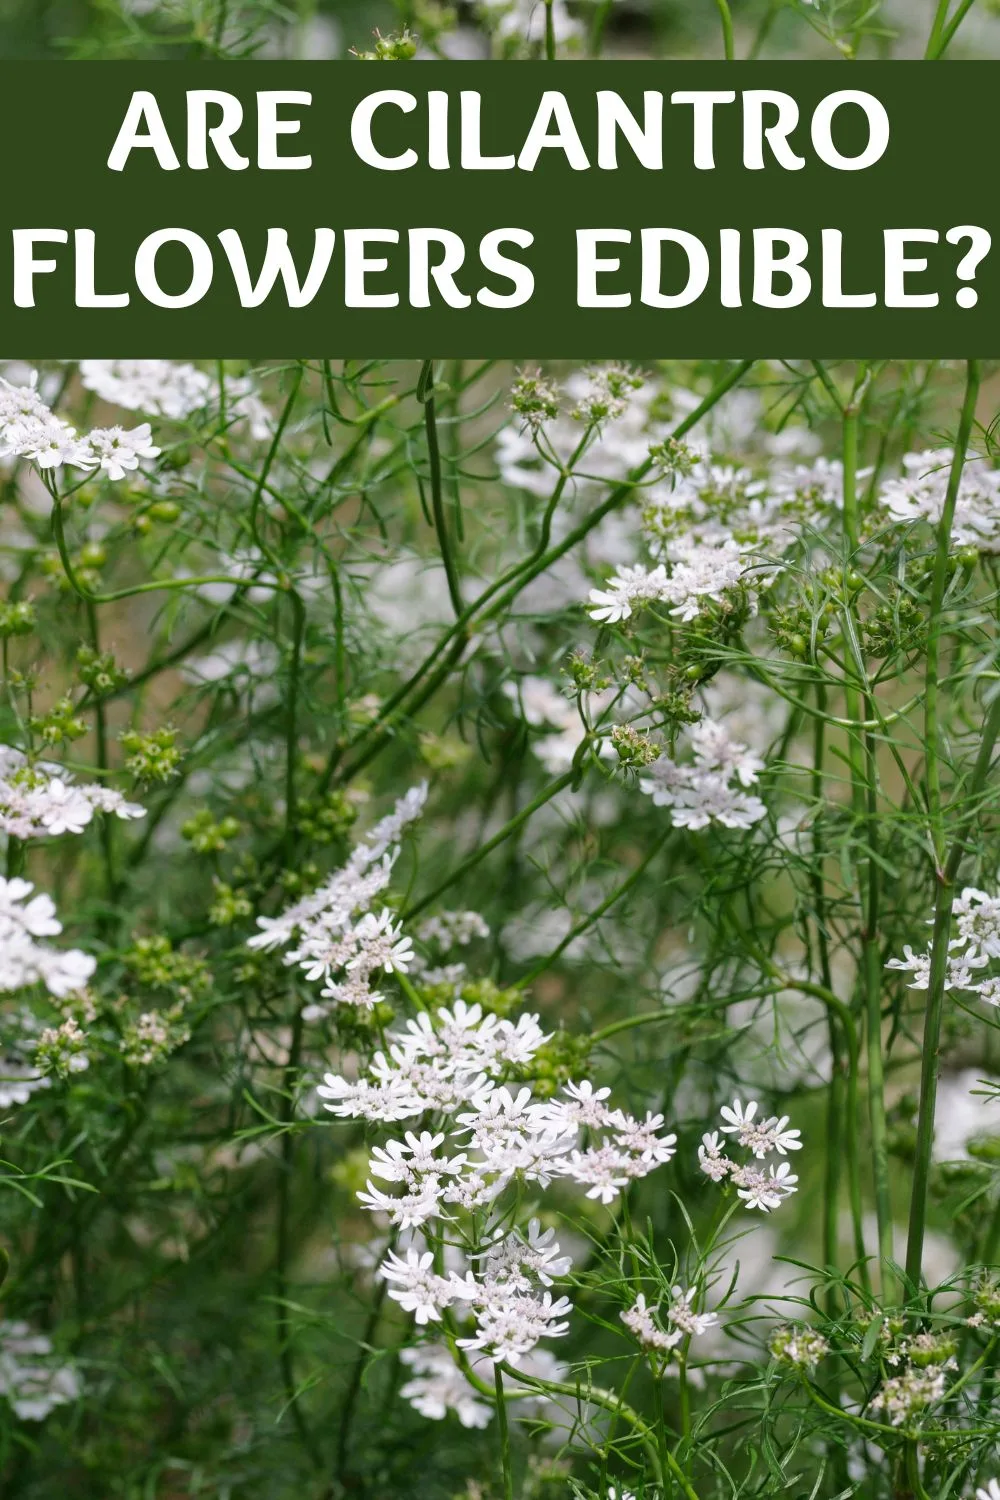 Are cilantro flowers edible?